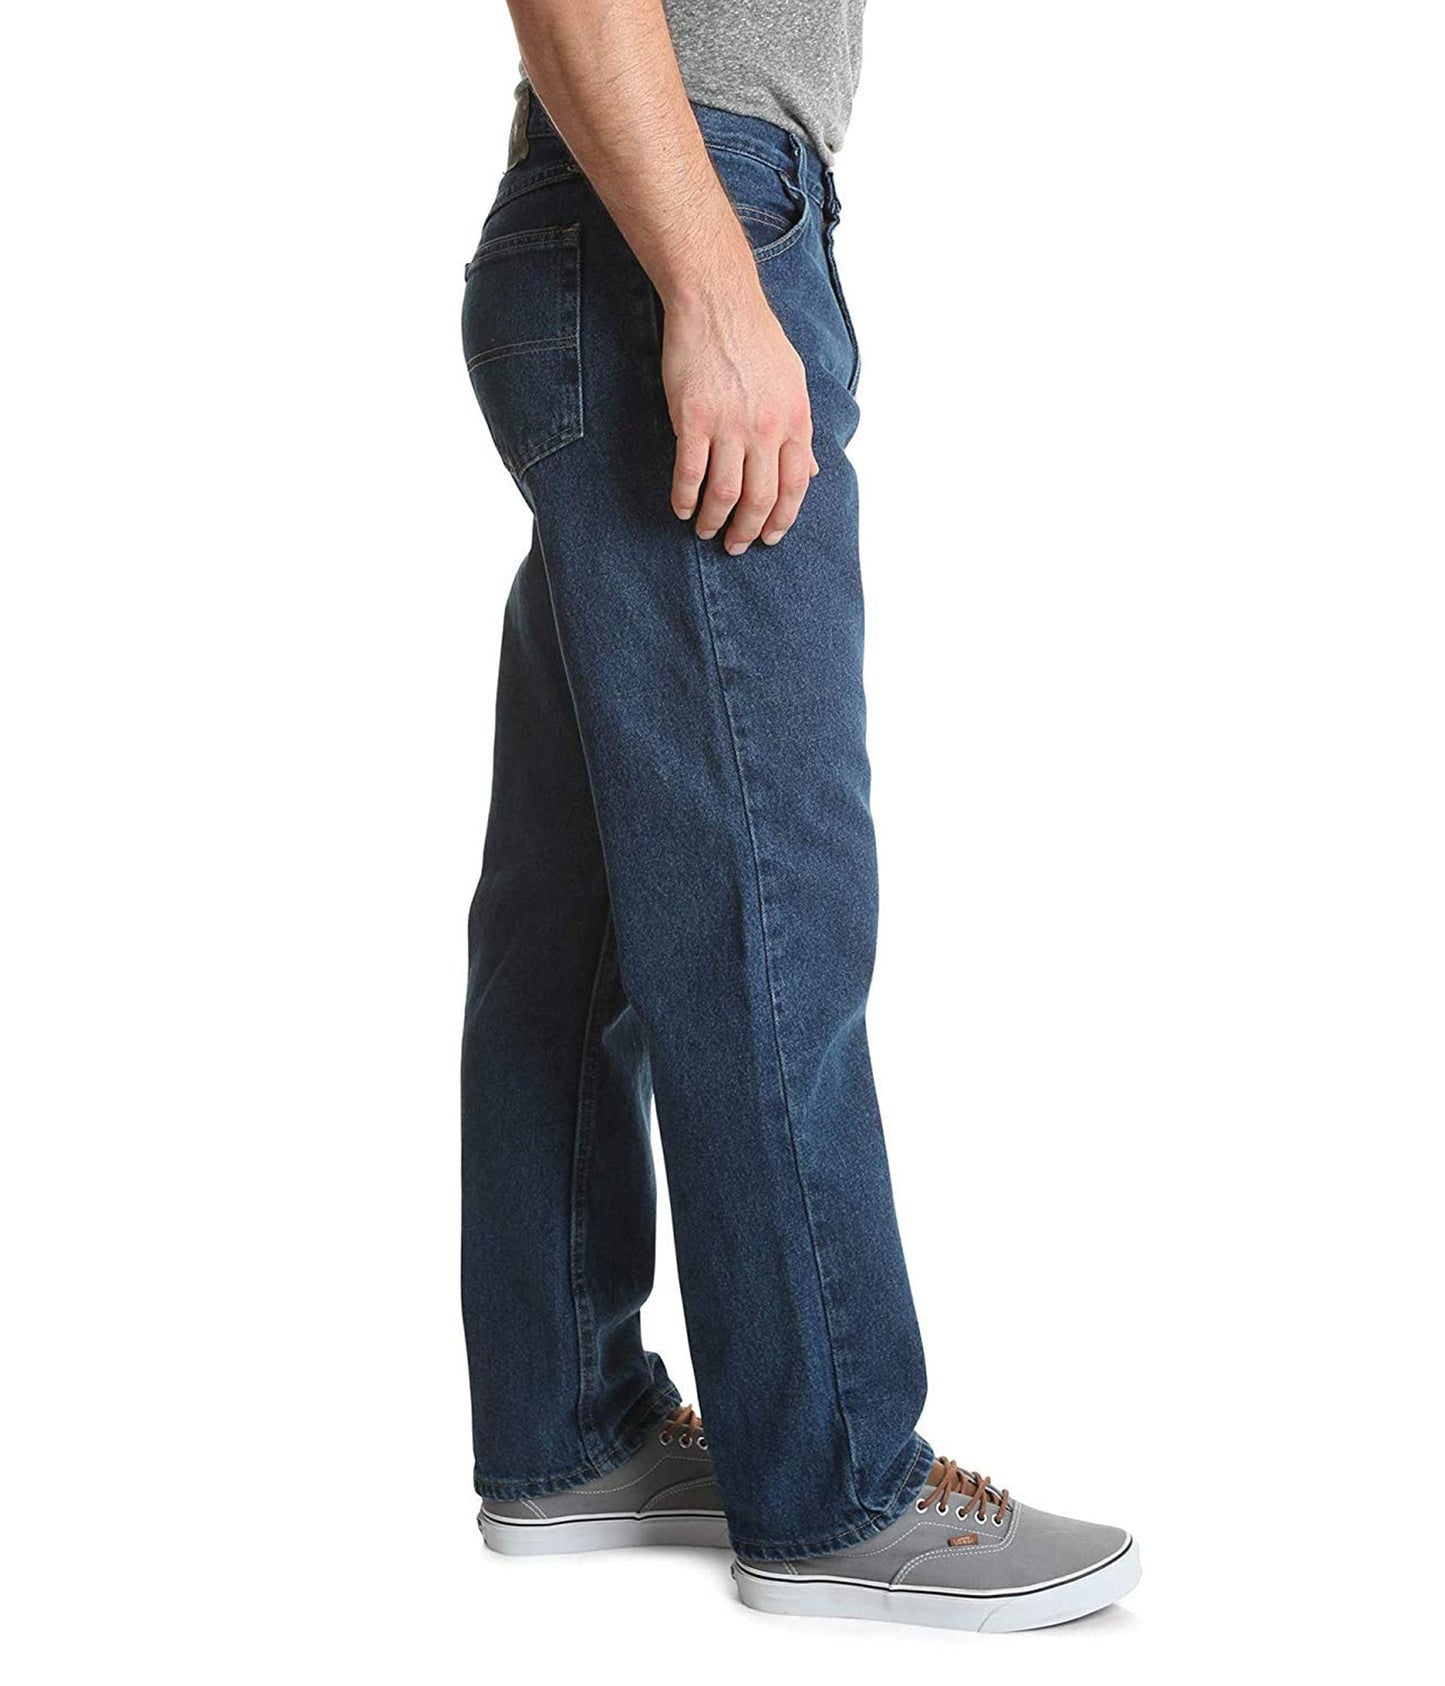 Wrangler Authentics Men's Big & Tall Classic 5-Pocket Relaxed Fit Cotton Jean, Dark Stonewash, 46W x 30L